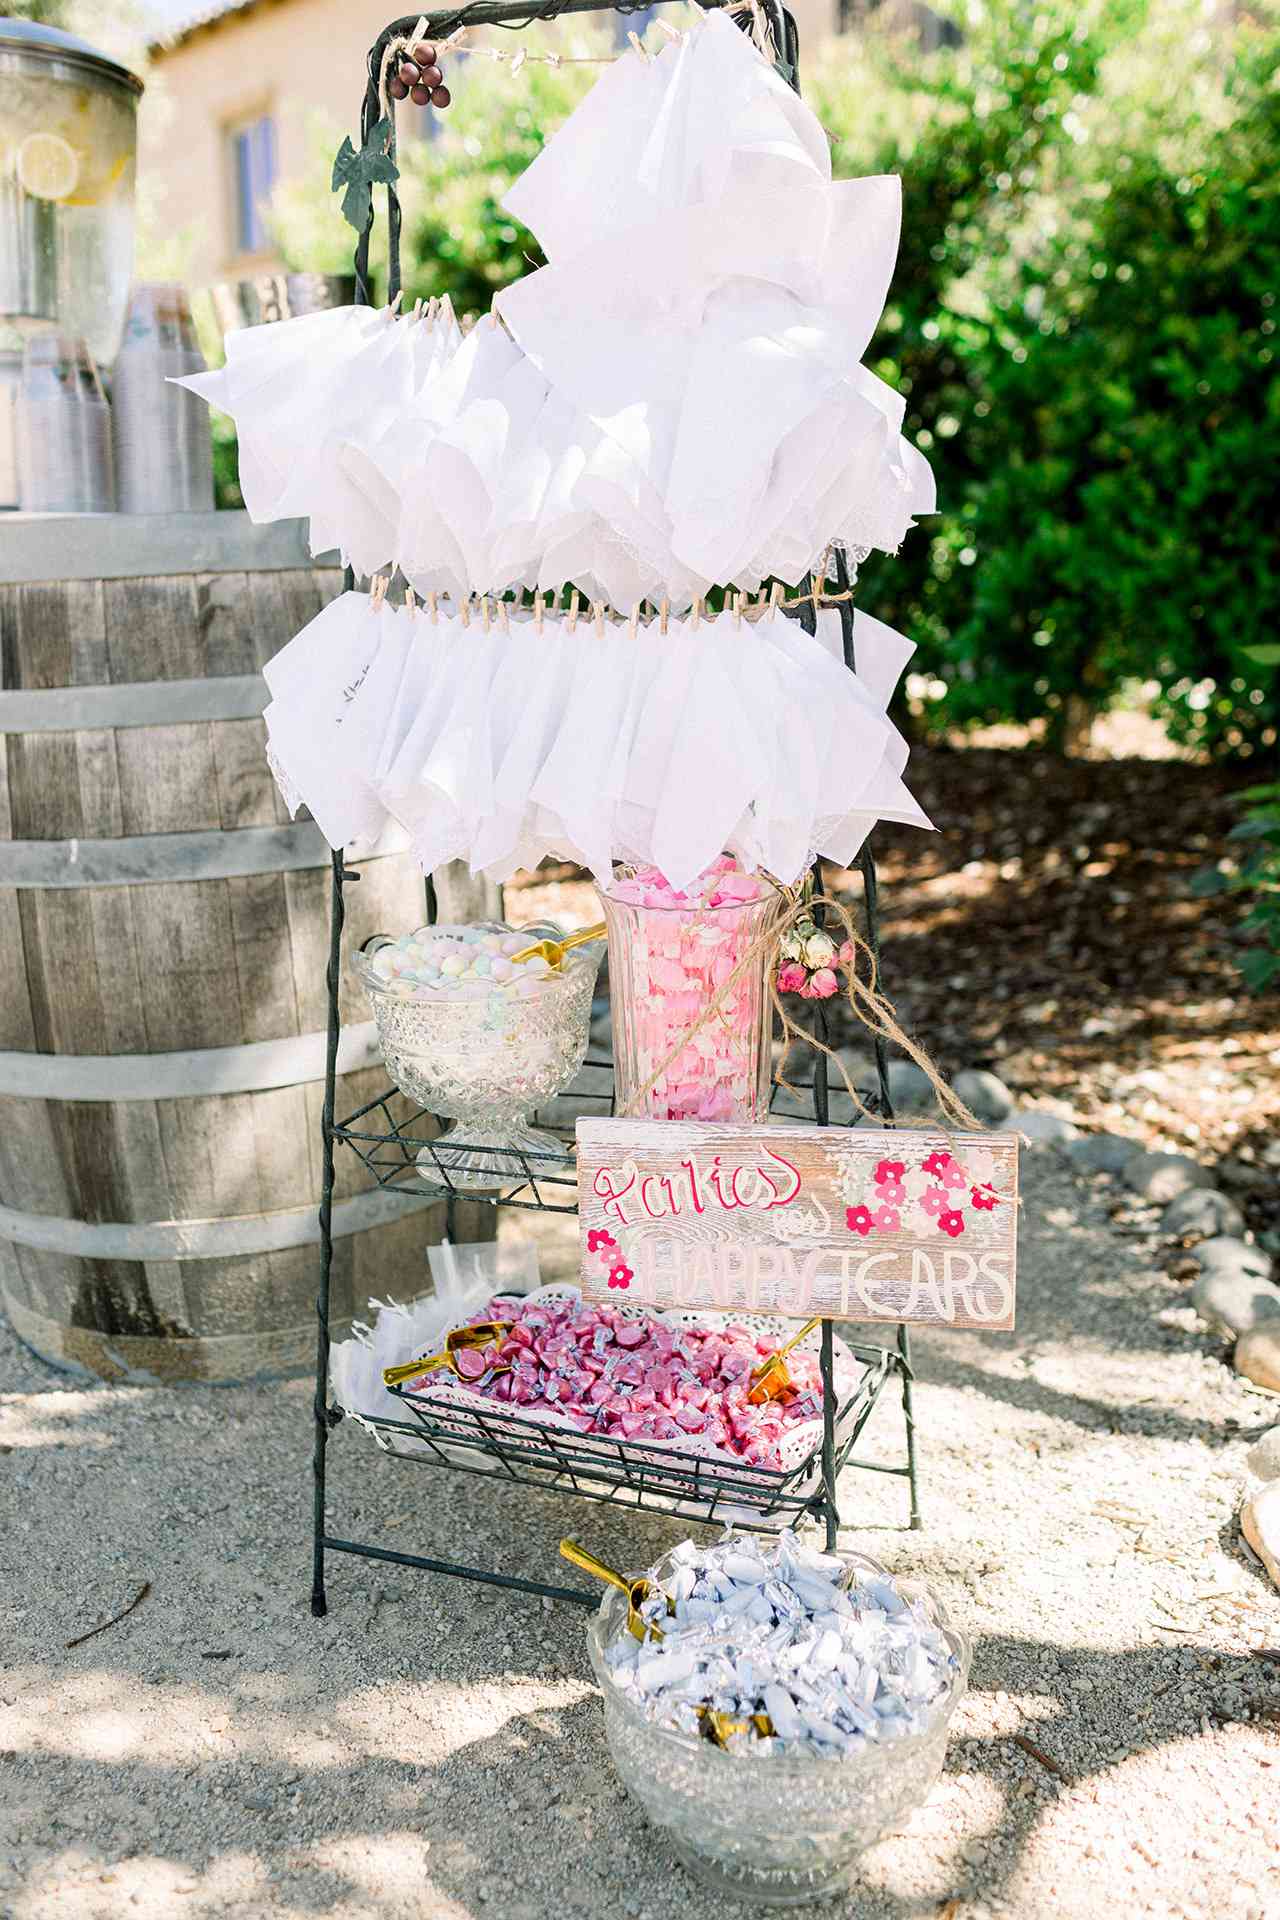 DIY handkerchief candy display outdoors